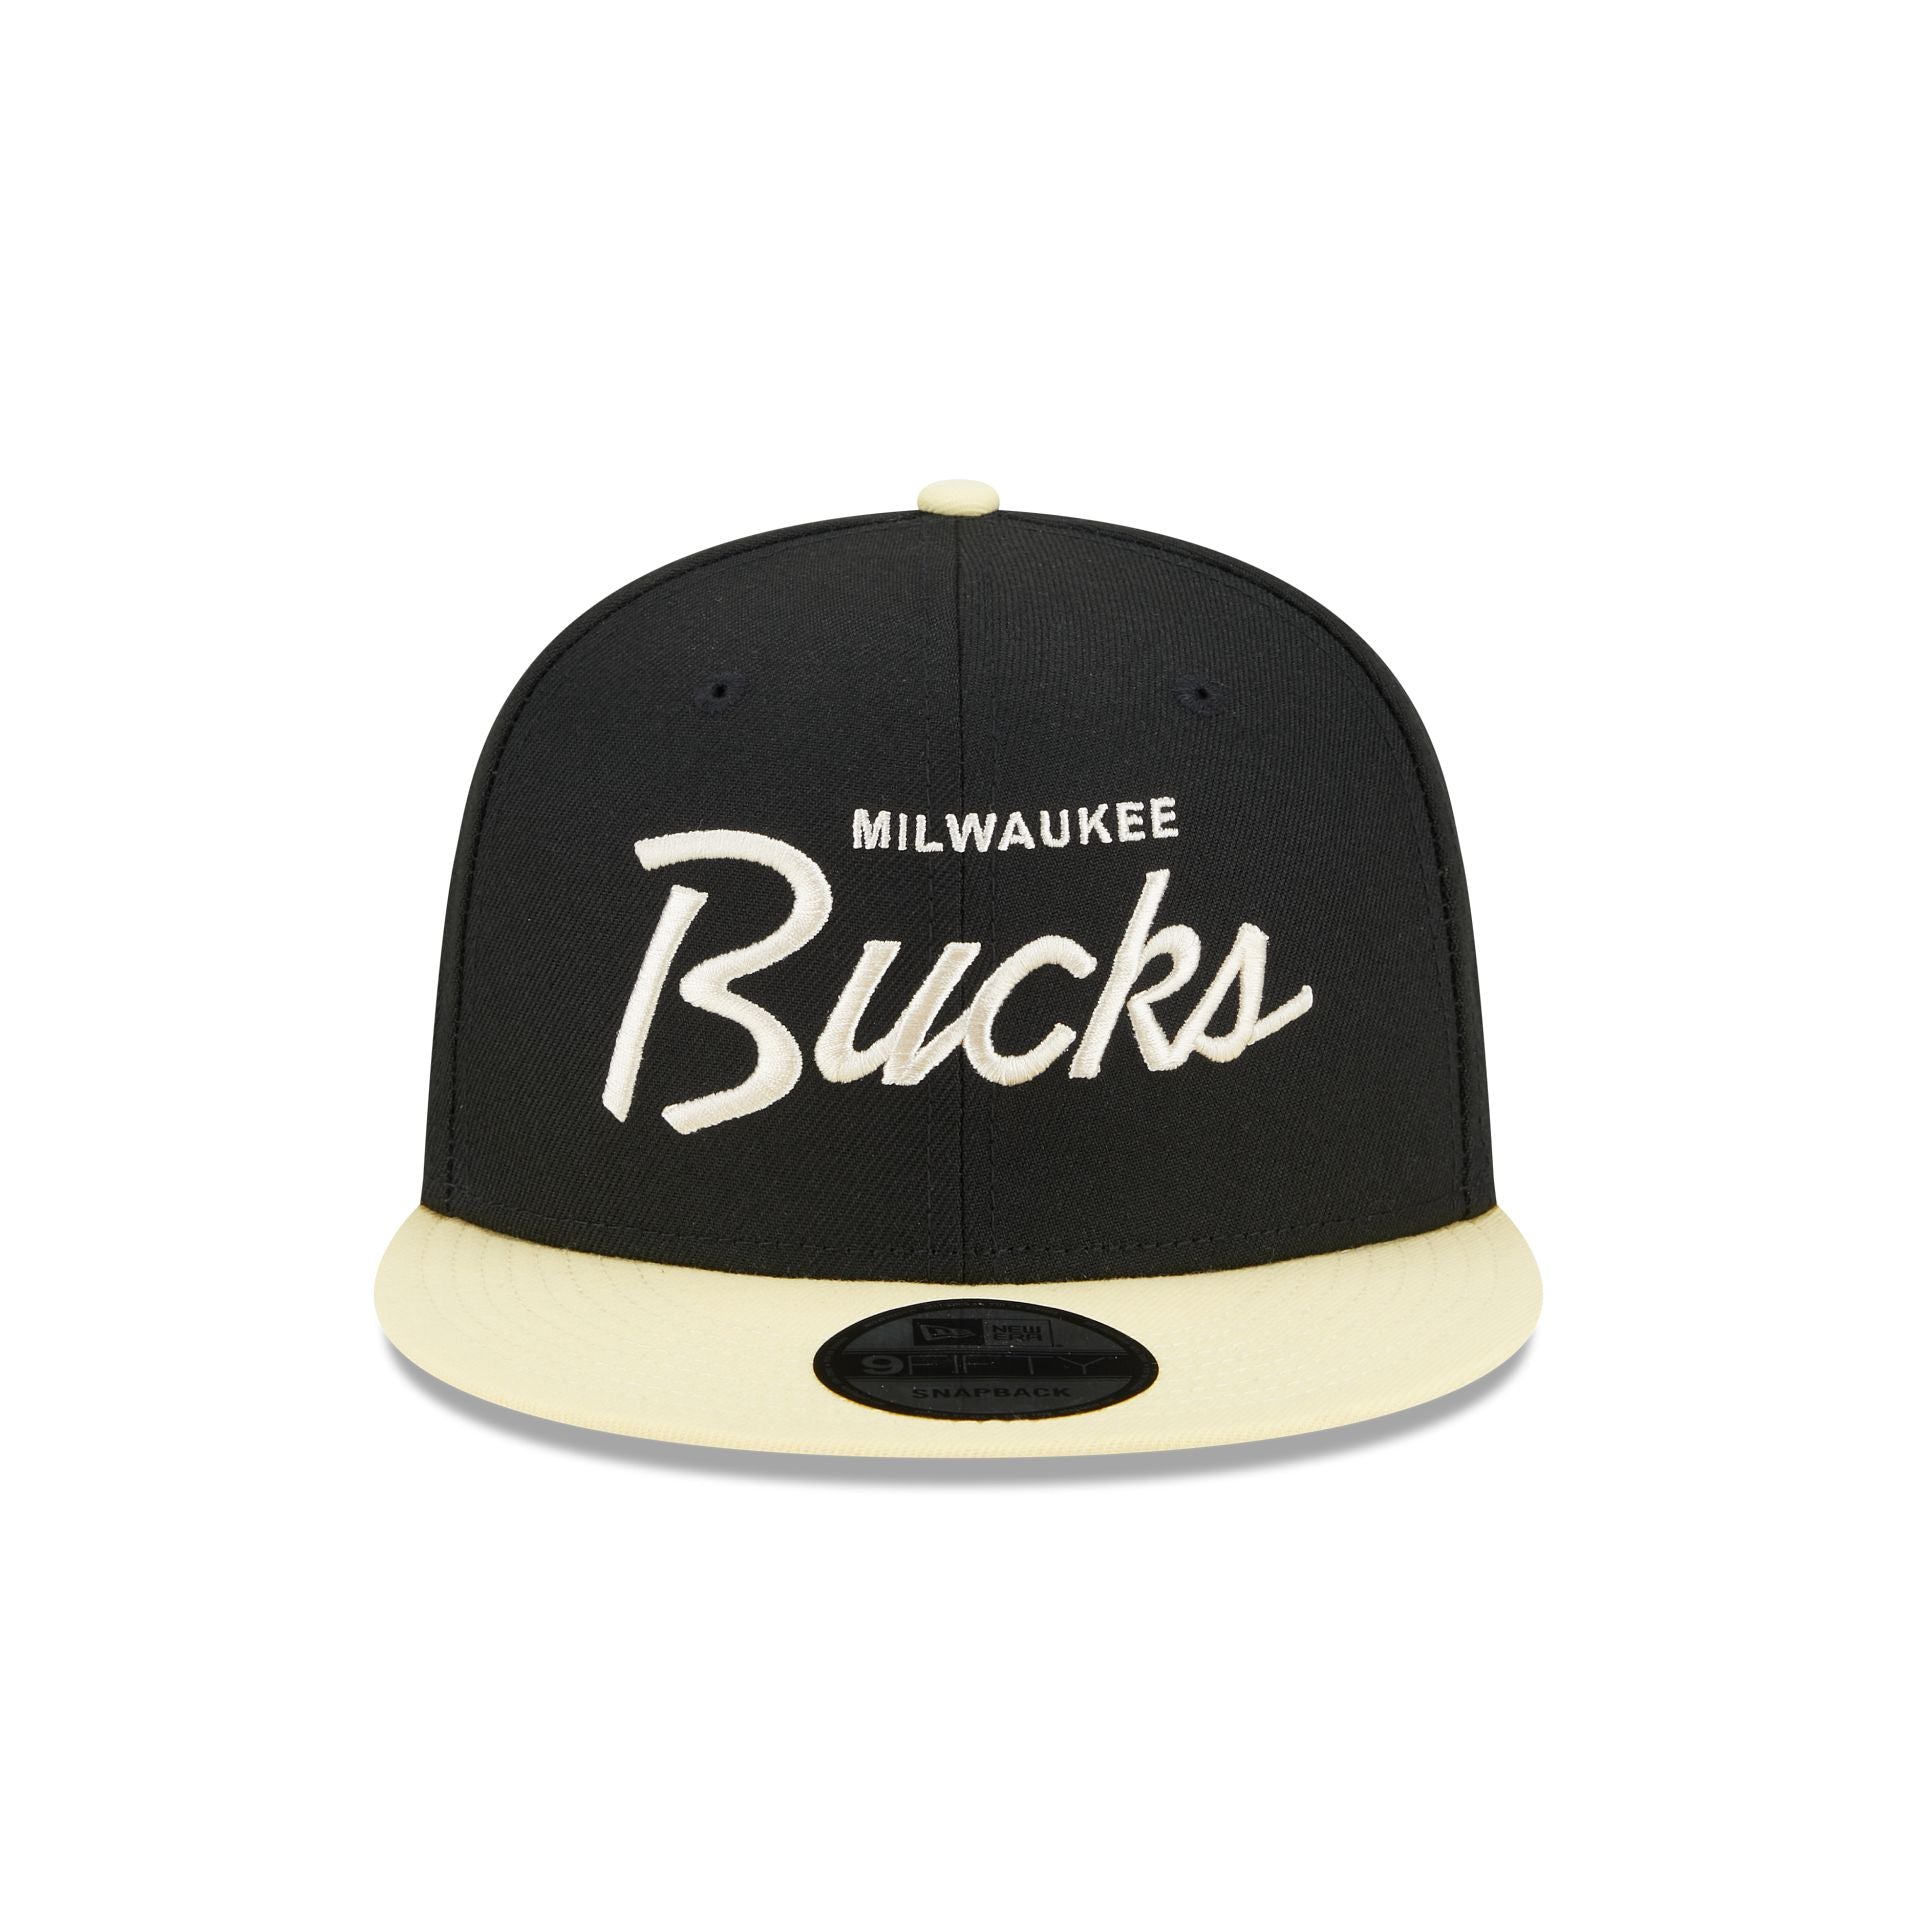 Milwaukee Bucks Pale Yellow Visor 9FIFTY Snapback Hat, Black, NBA by New Era